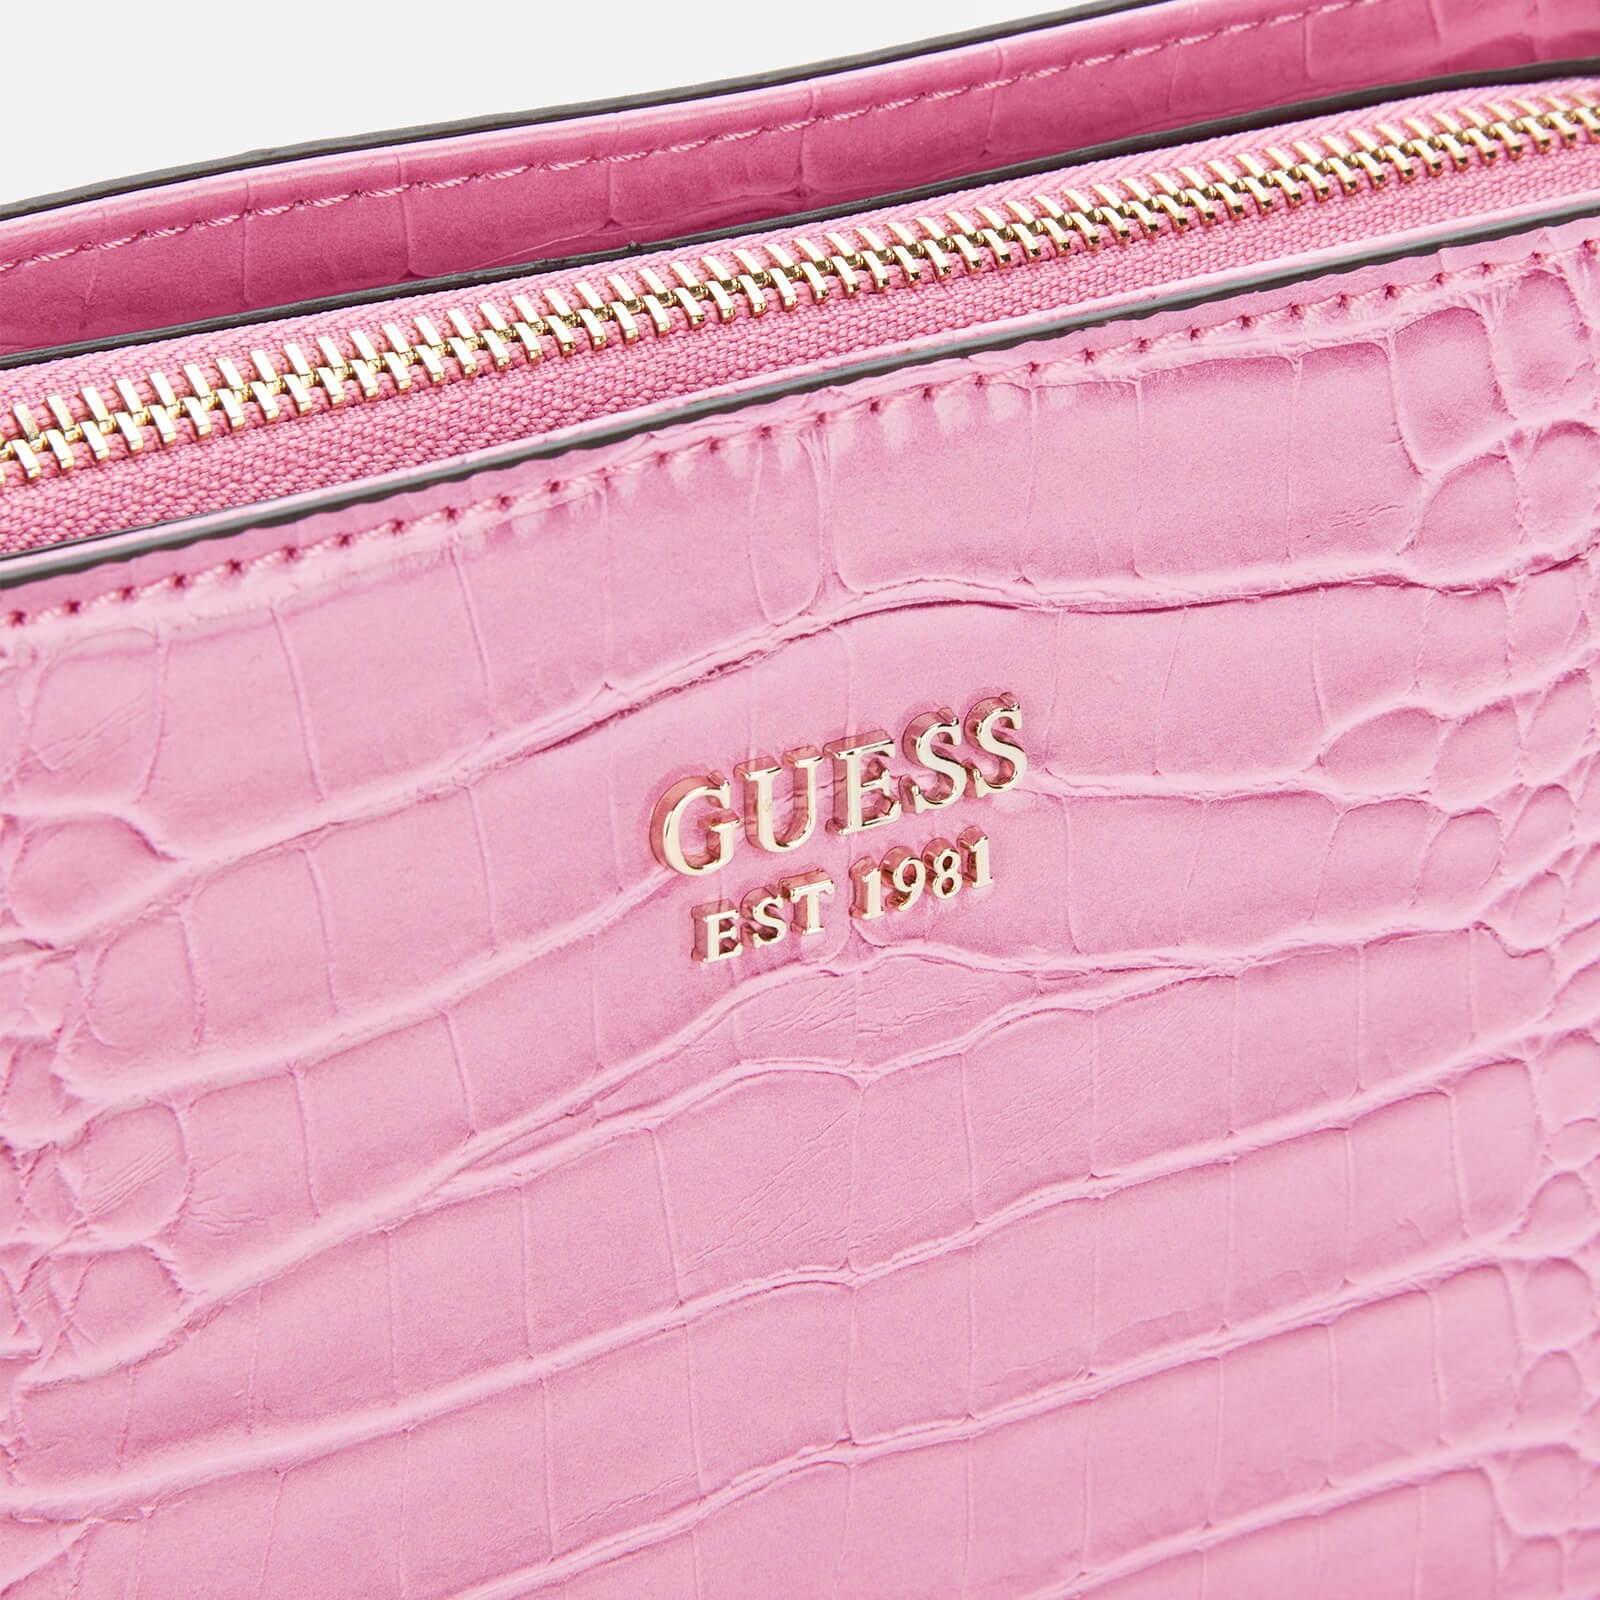 Guess Katey Mini Top Zip Shoulder Bag in Pink | Lyst